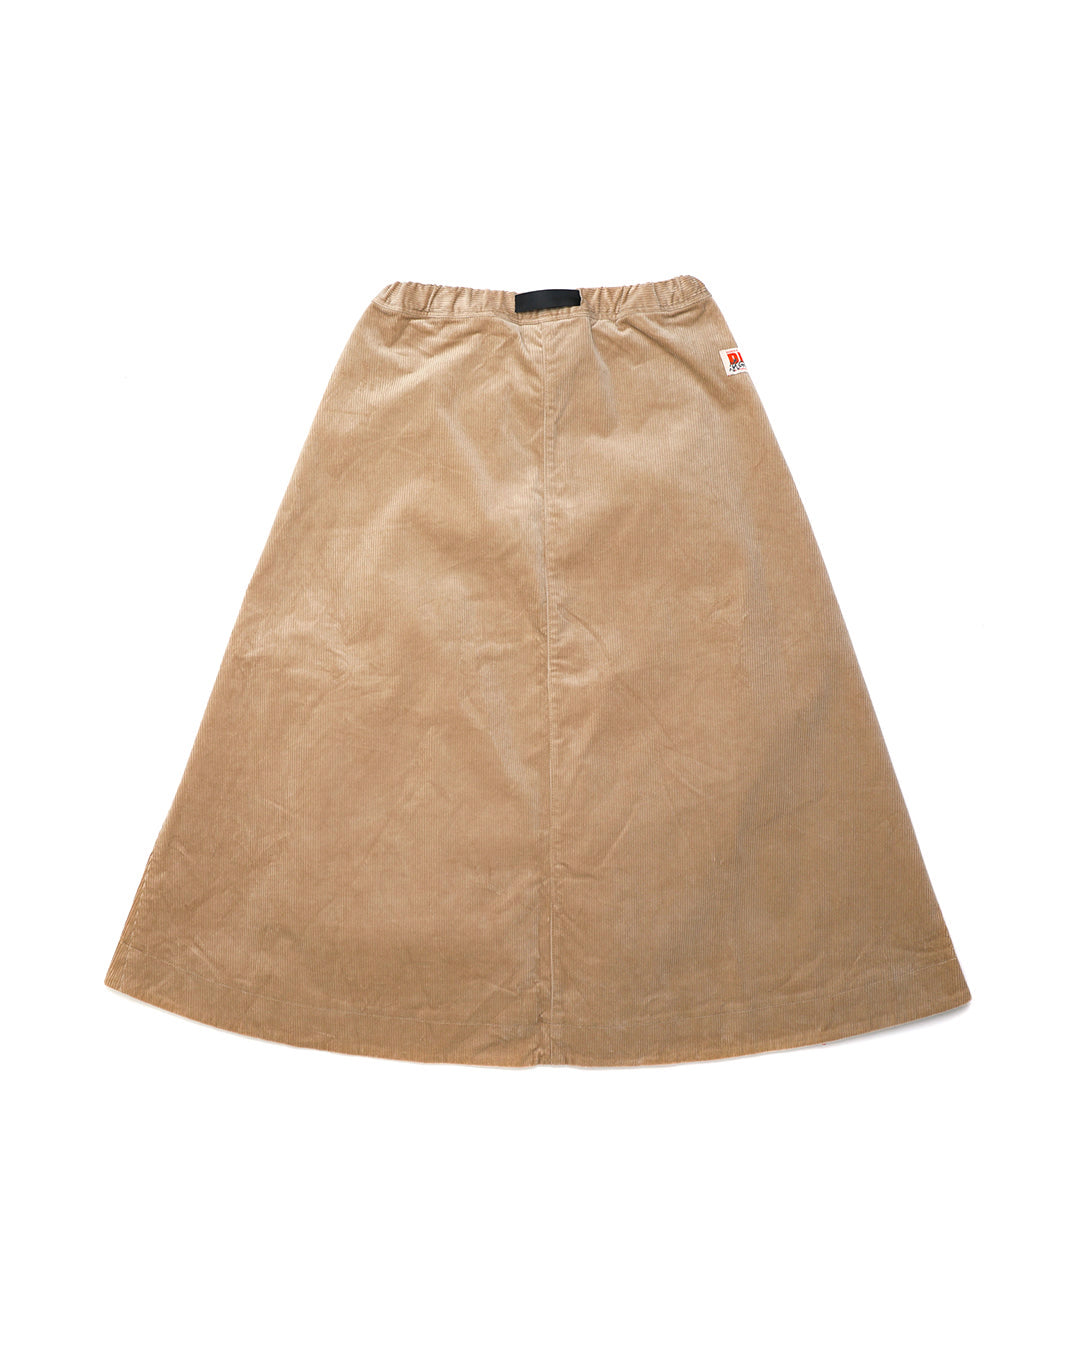 Talecut Skirt - Beige|Flatlay